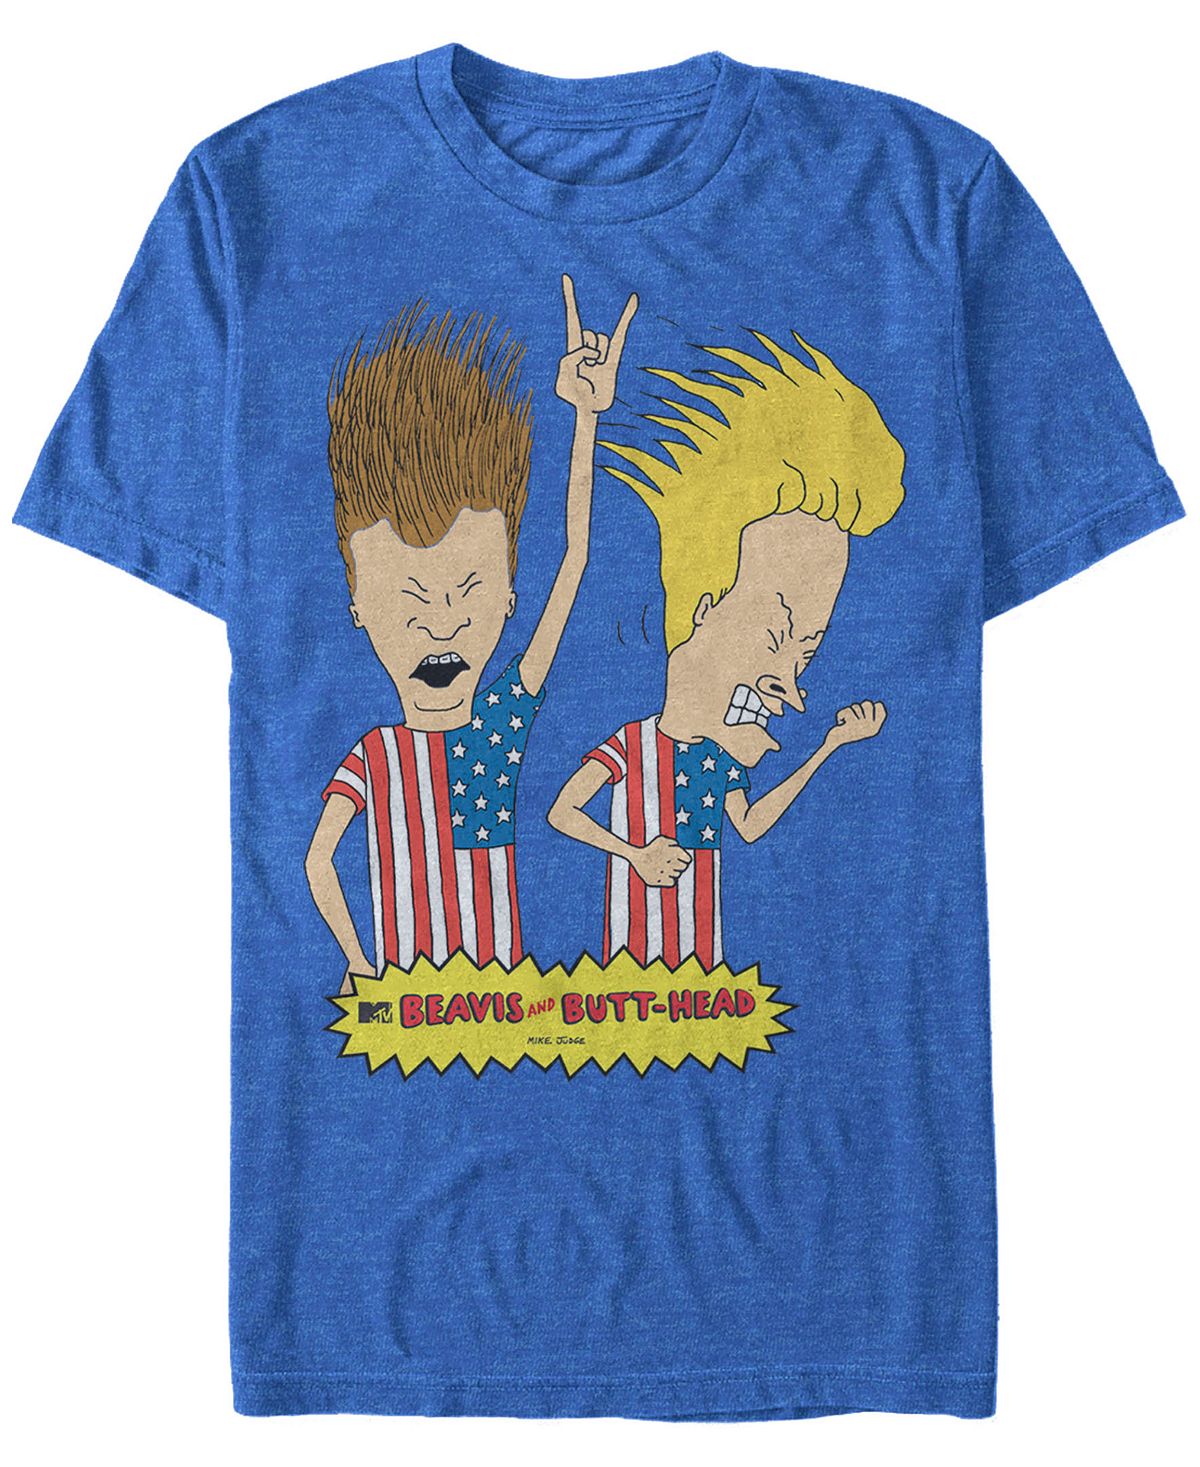 Мужская футболка с коротким рукавом с логотипом beavis and butthead mtv rock out merica Fifth Sun, мульти international